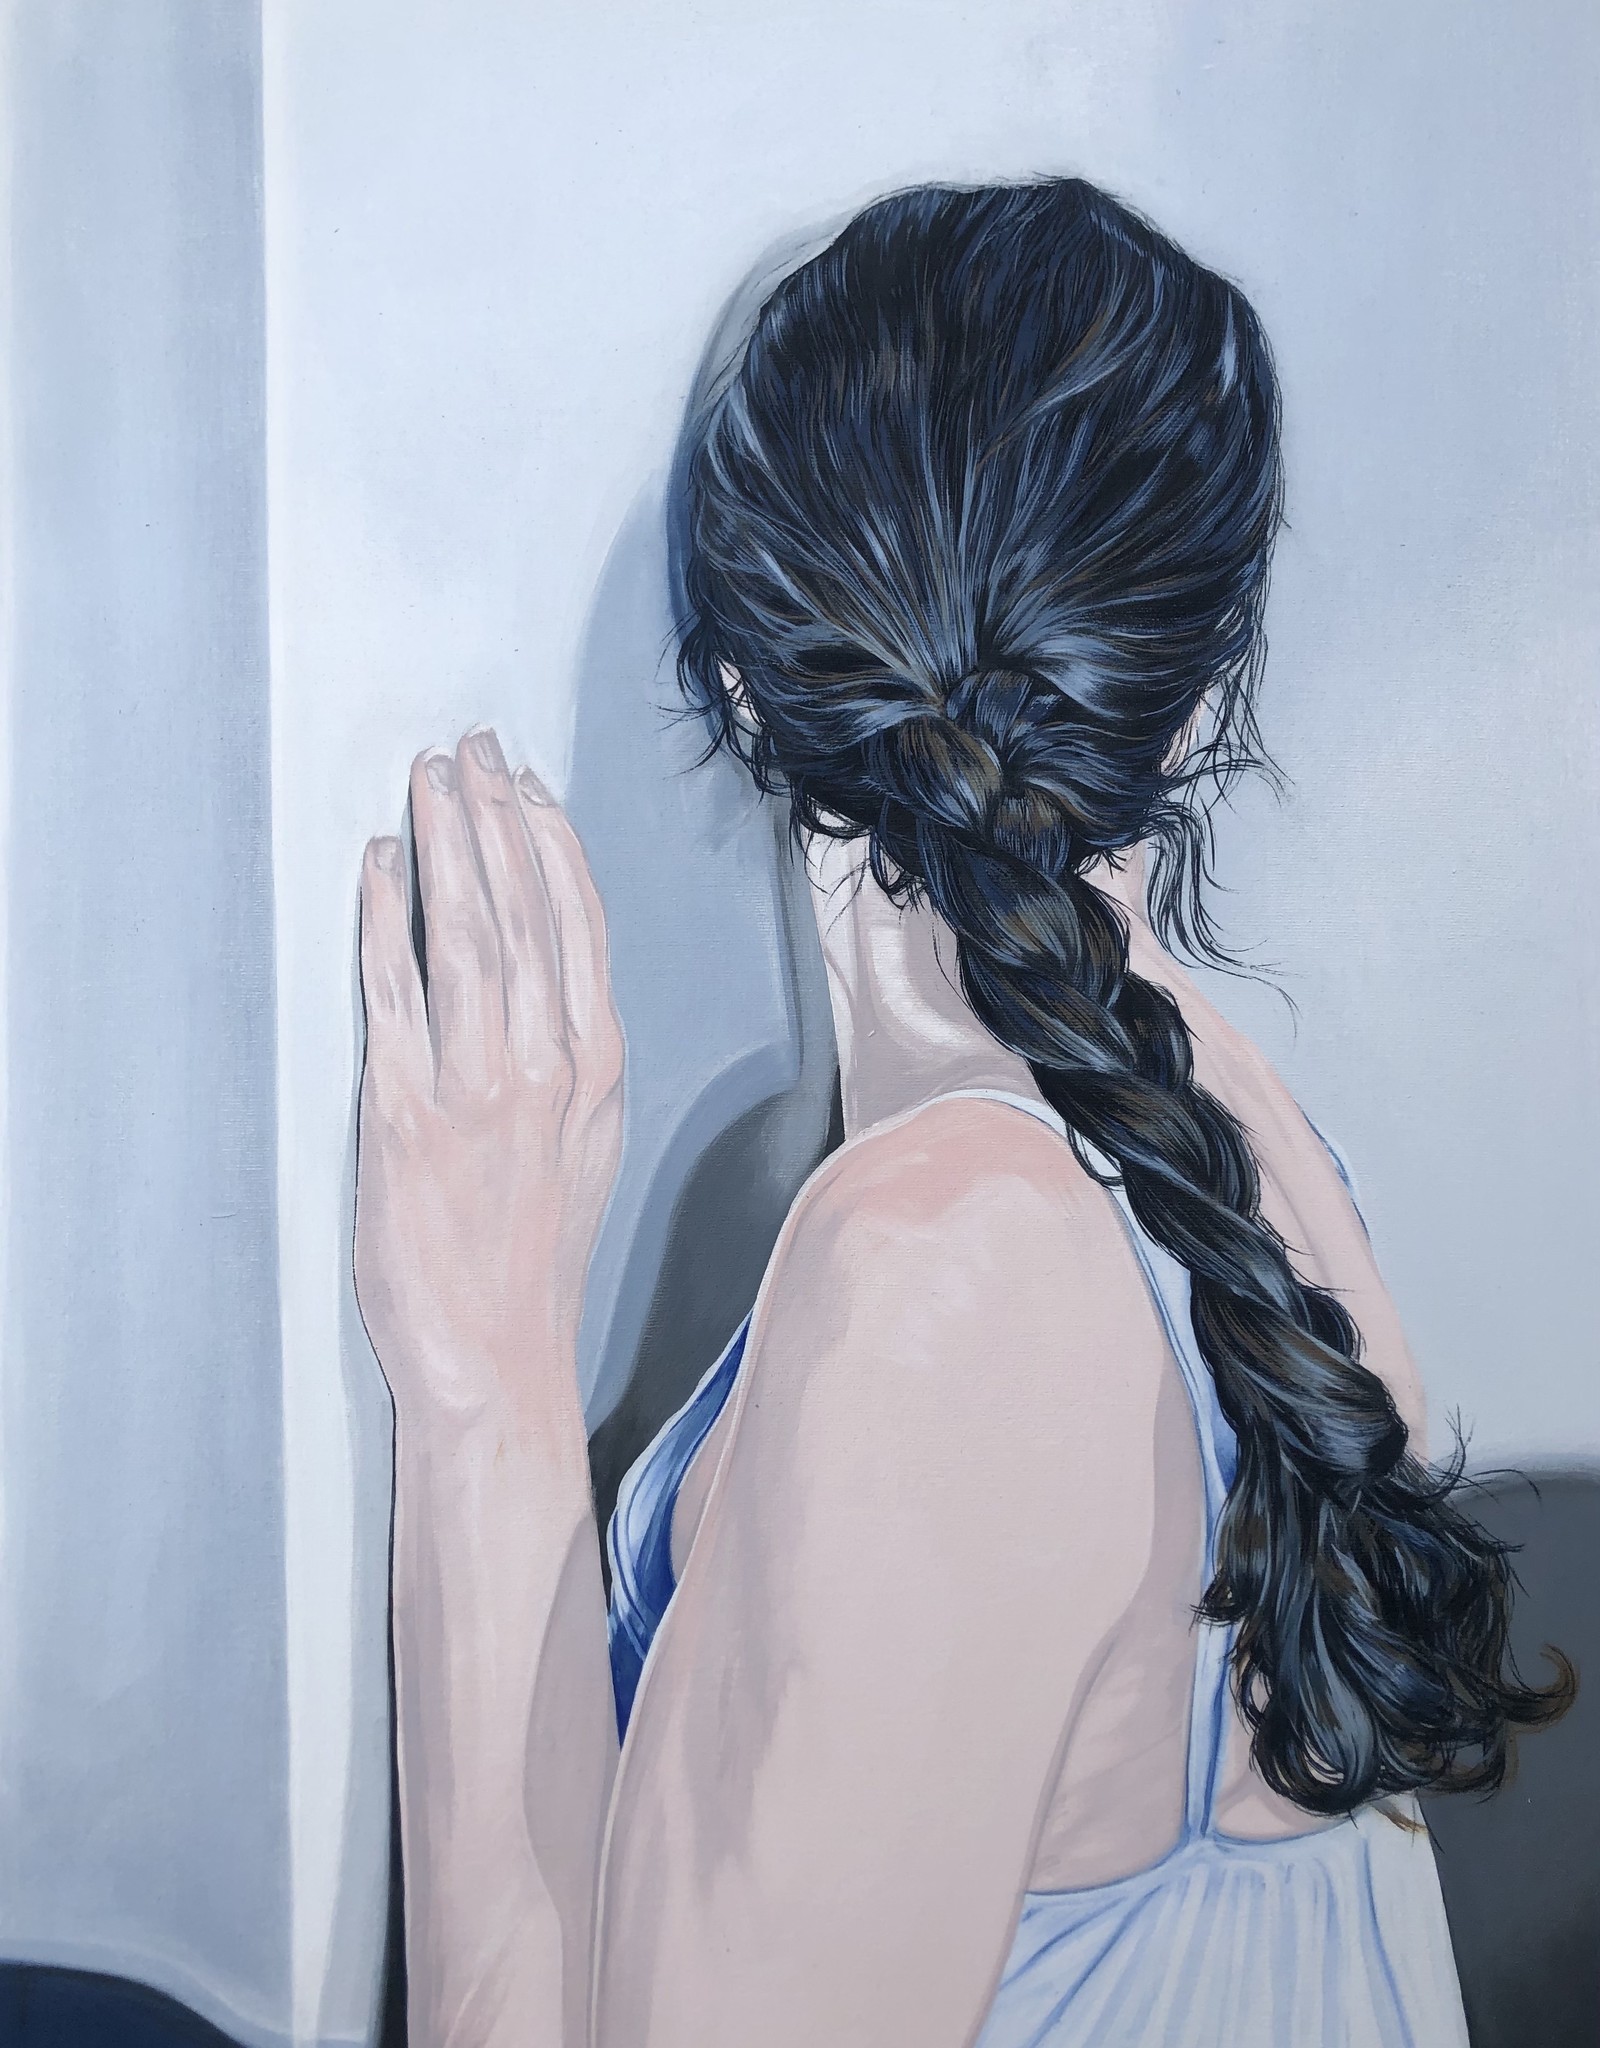 Tania Costa "Blue"  - 18" x 24"